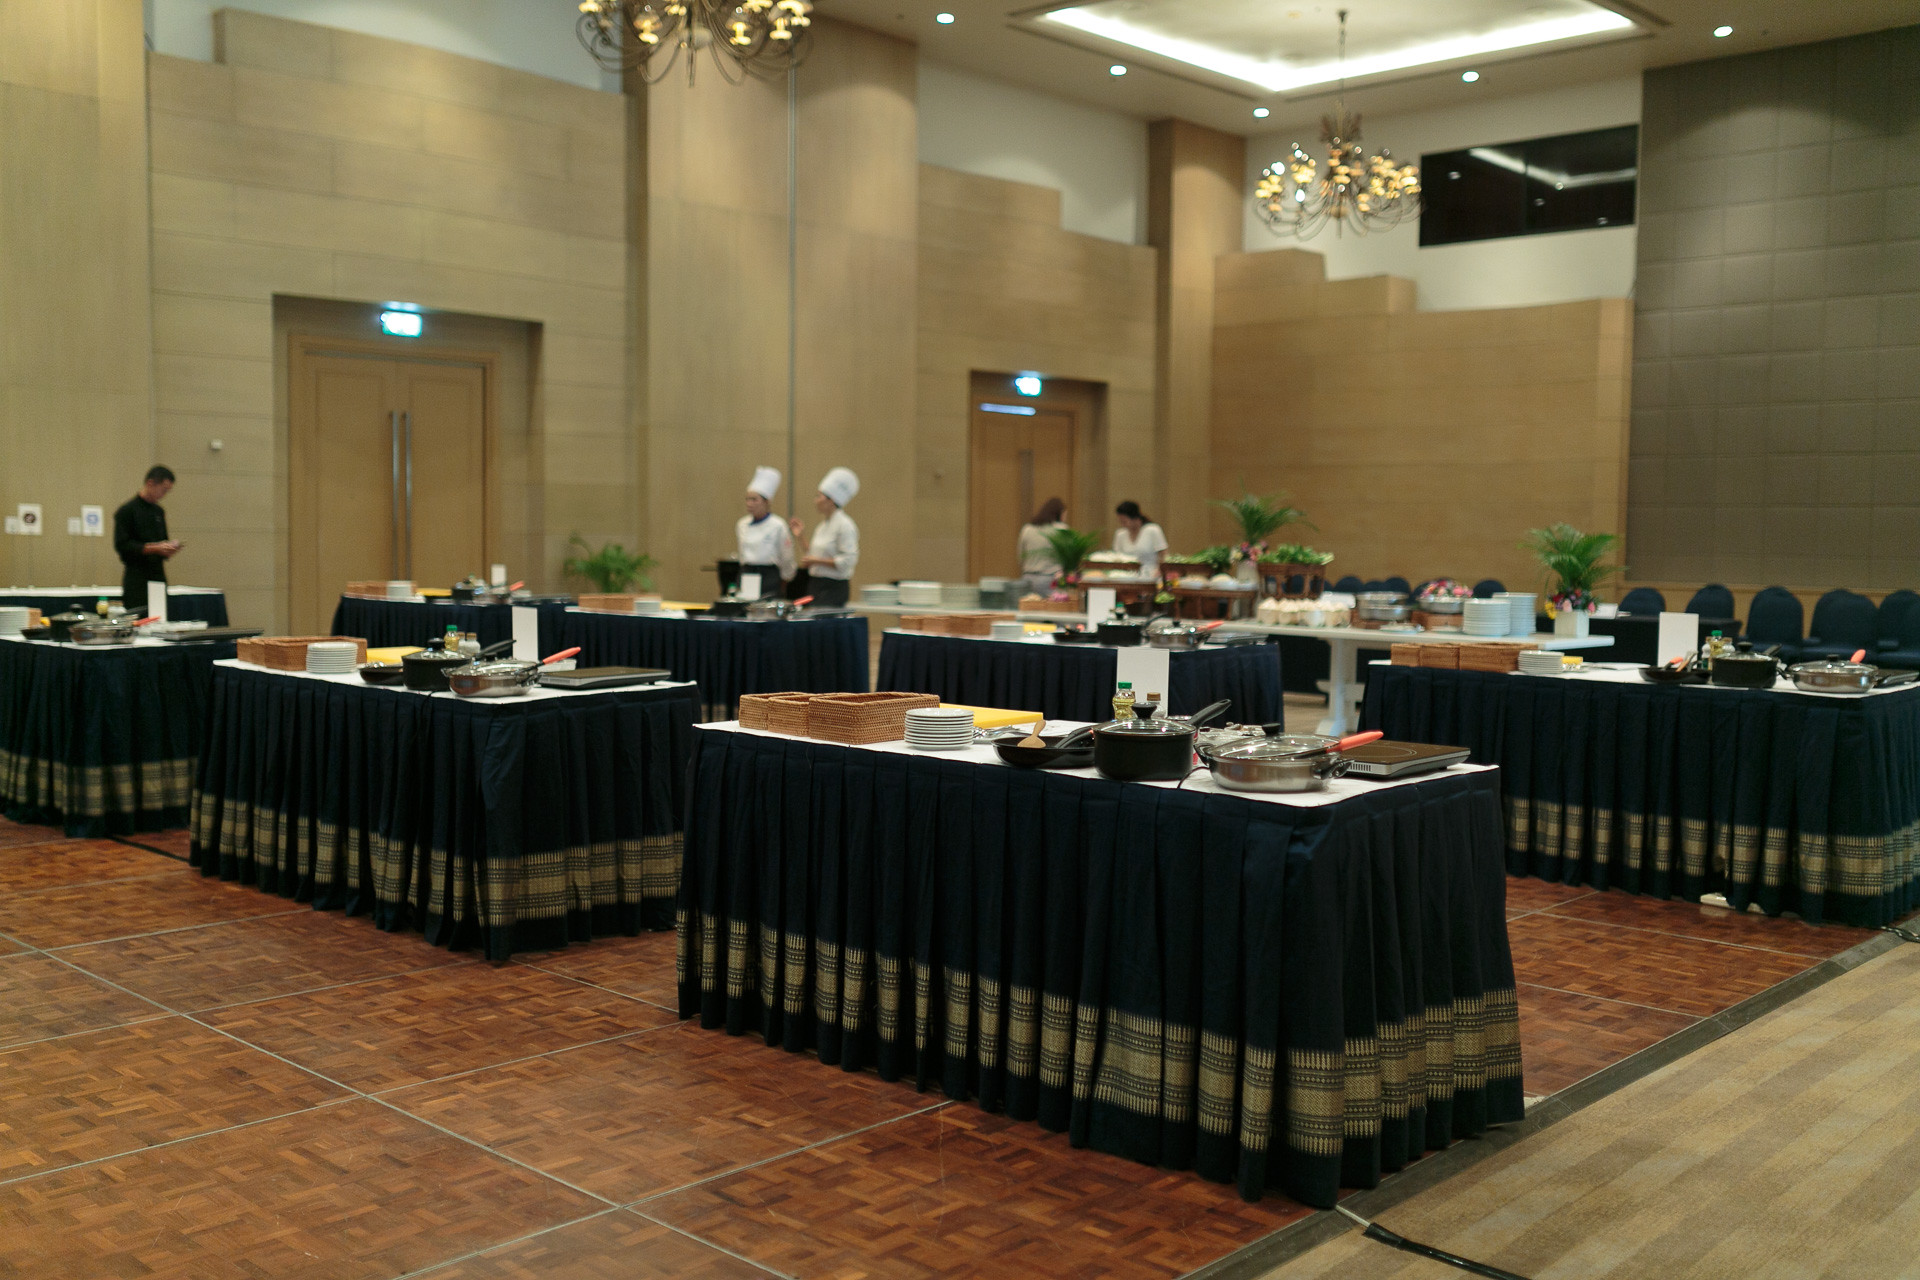 Top Chef – Malaysia Team Building Activity - Making Teams